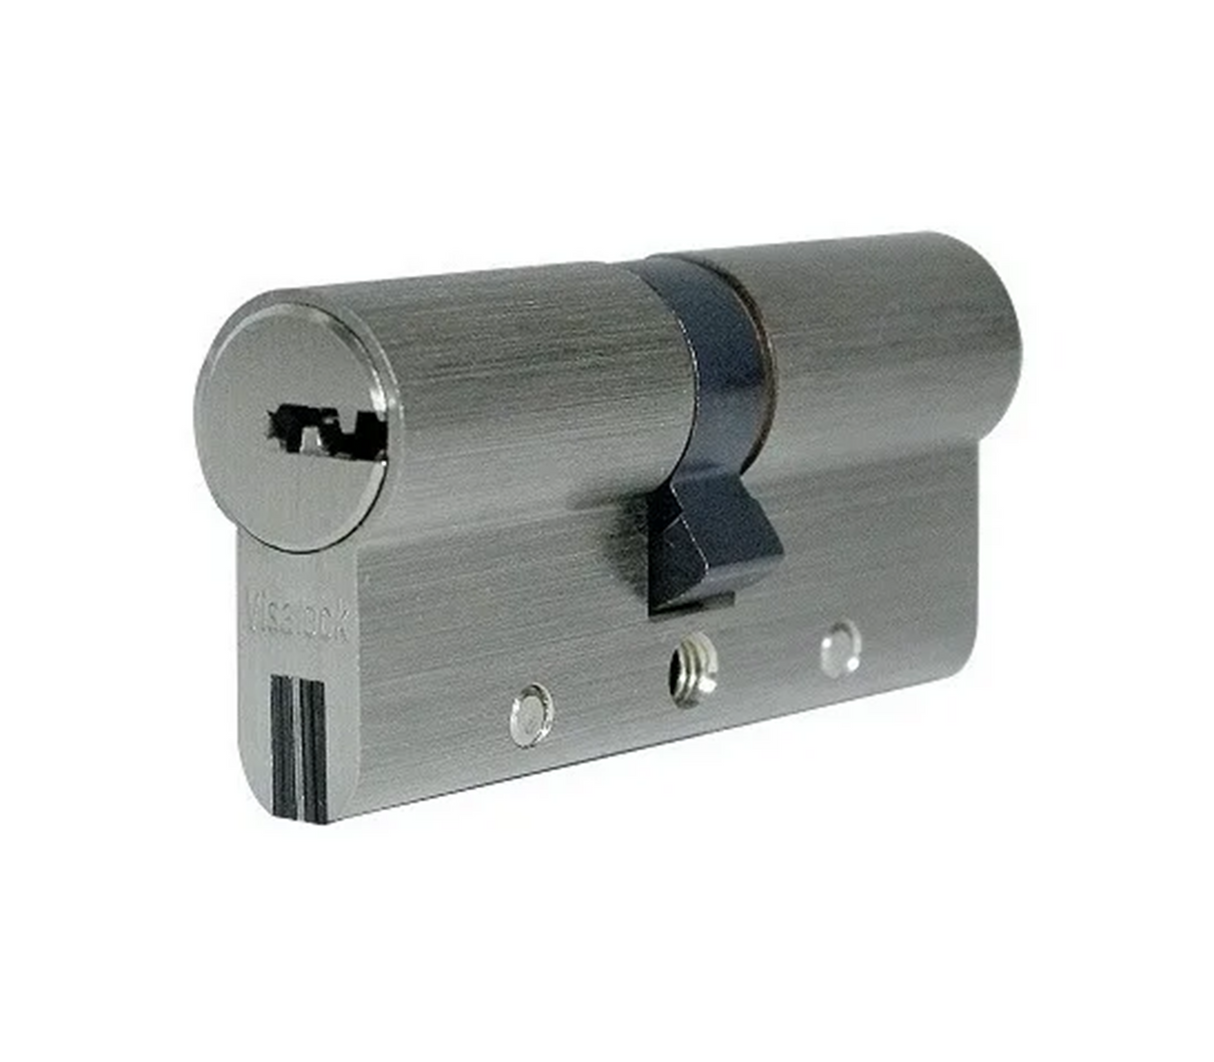 Cilindro perfil doble C 60mm plateado caja Visalock